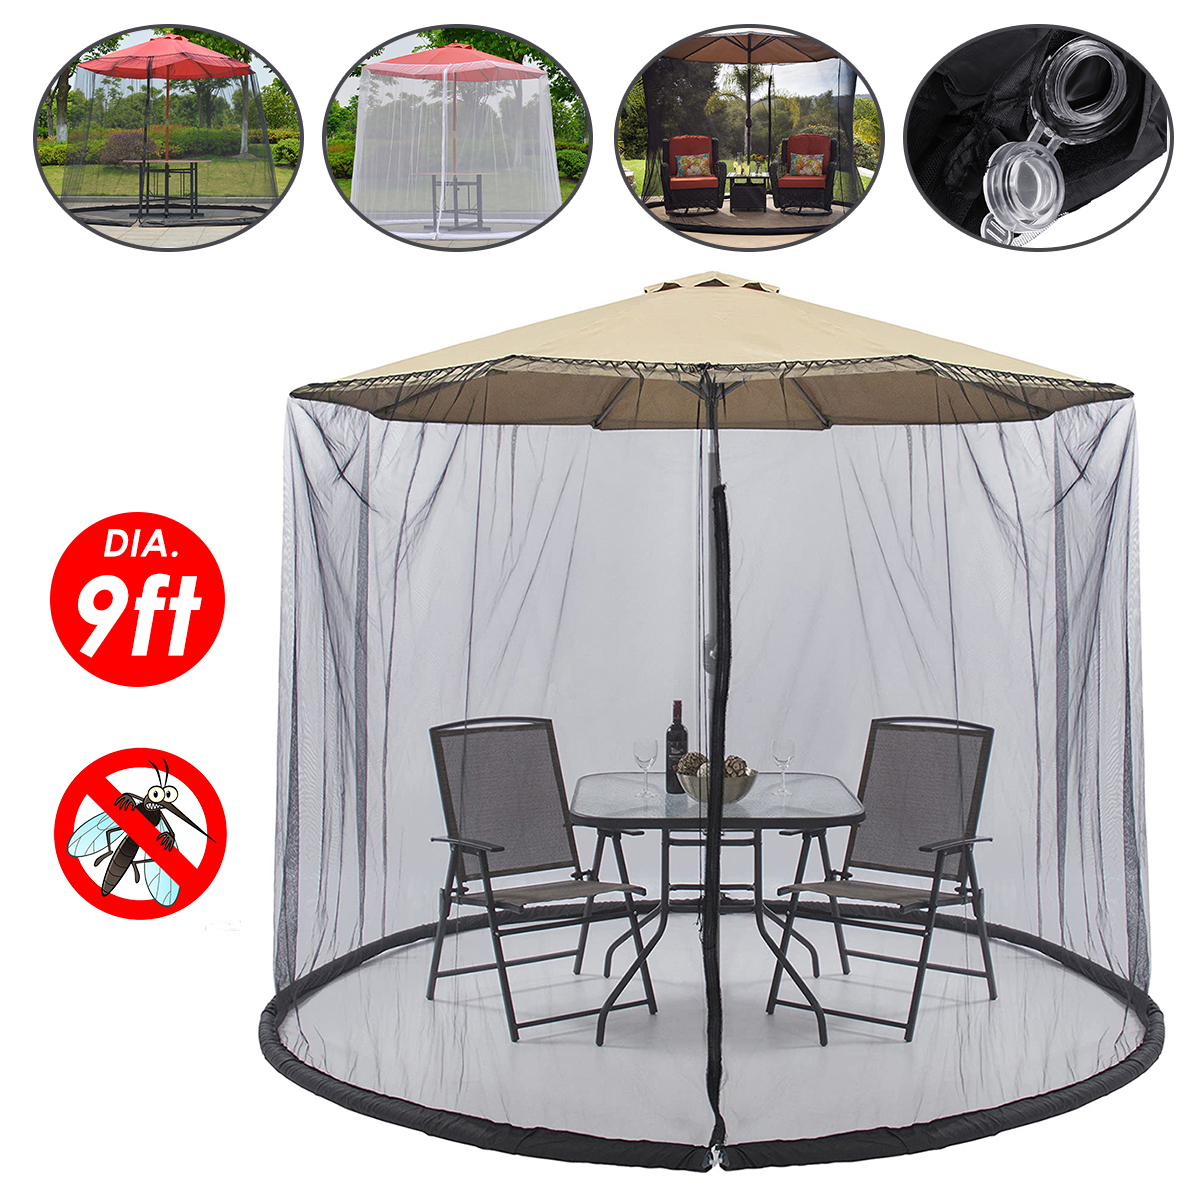 9ft-Garden-Outdoor-Patio-Umbrella-Table-Screen-Cover-Net-Mosquito-Insect-Net-1751979-1